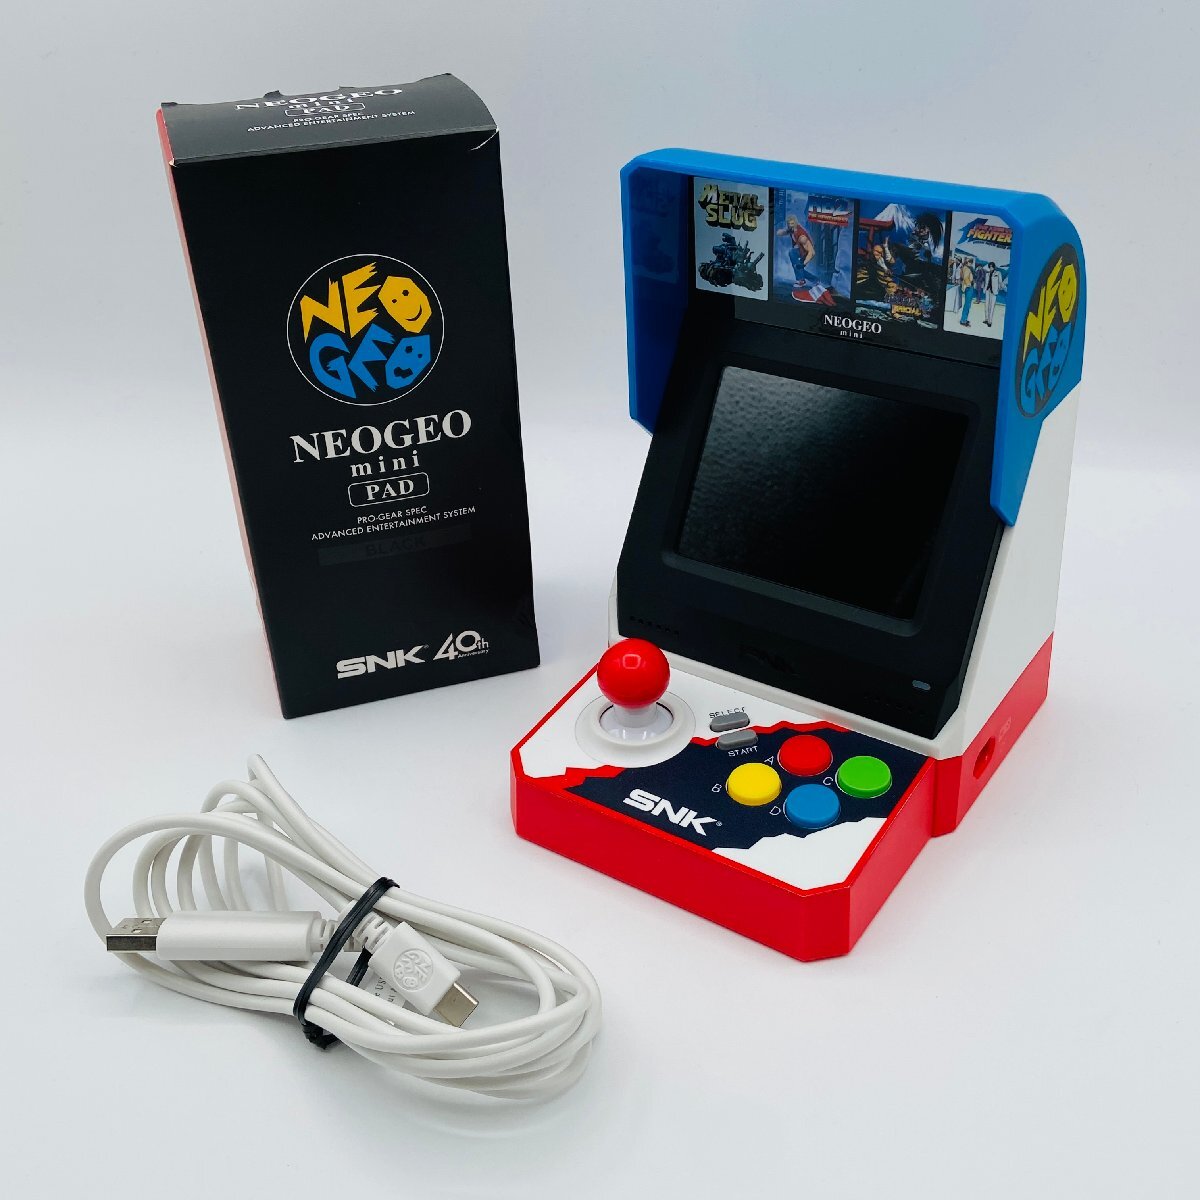 【641-6319k】1円スタート【欠品あり】SNK NEOGEO mini ネオジオミニ 本体 NEOGEO mini PAD コントローラーセットの画像1